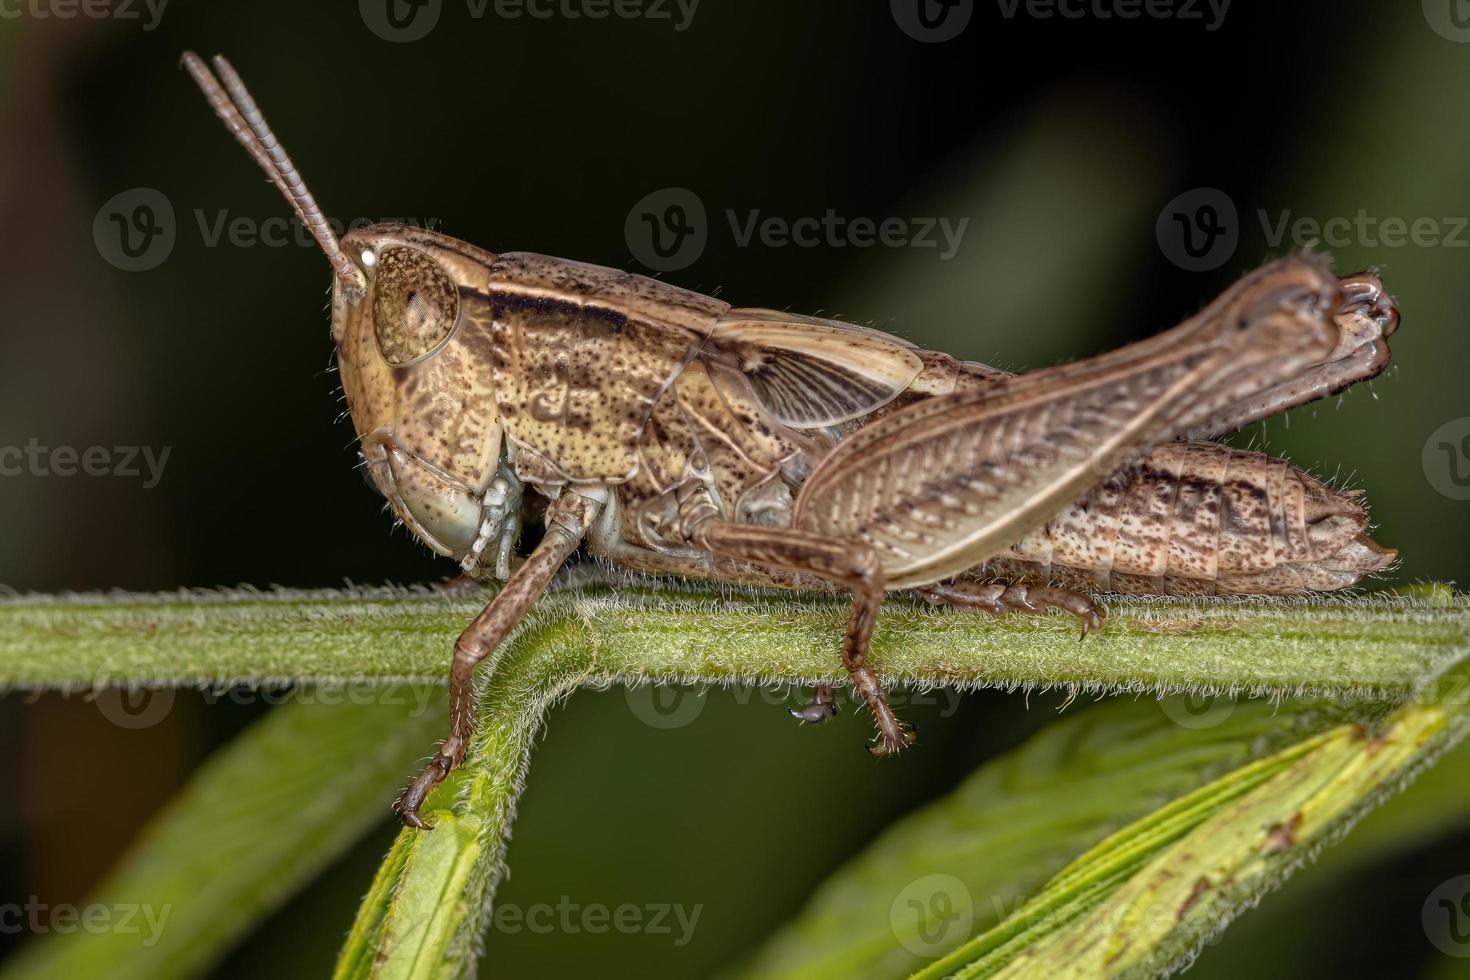 Adult Stridulating Slant-faced Grasshopper photo